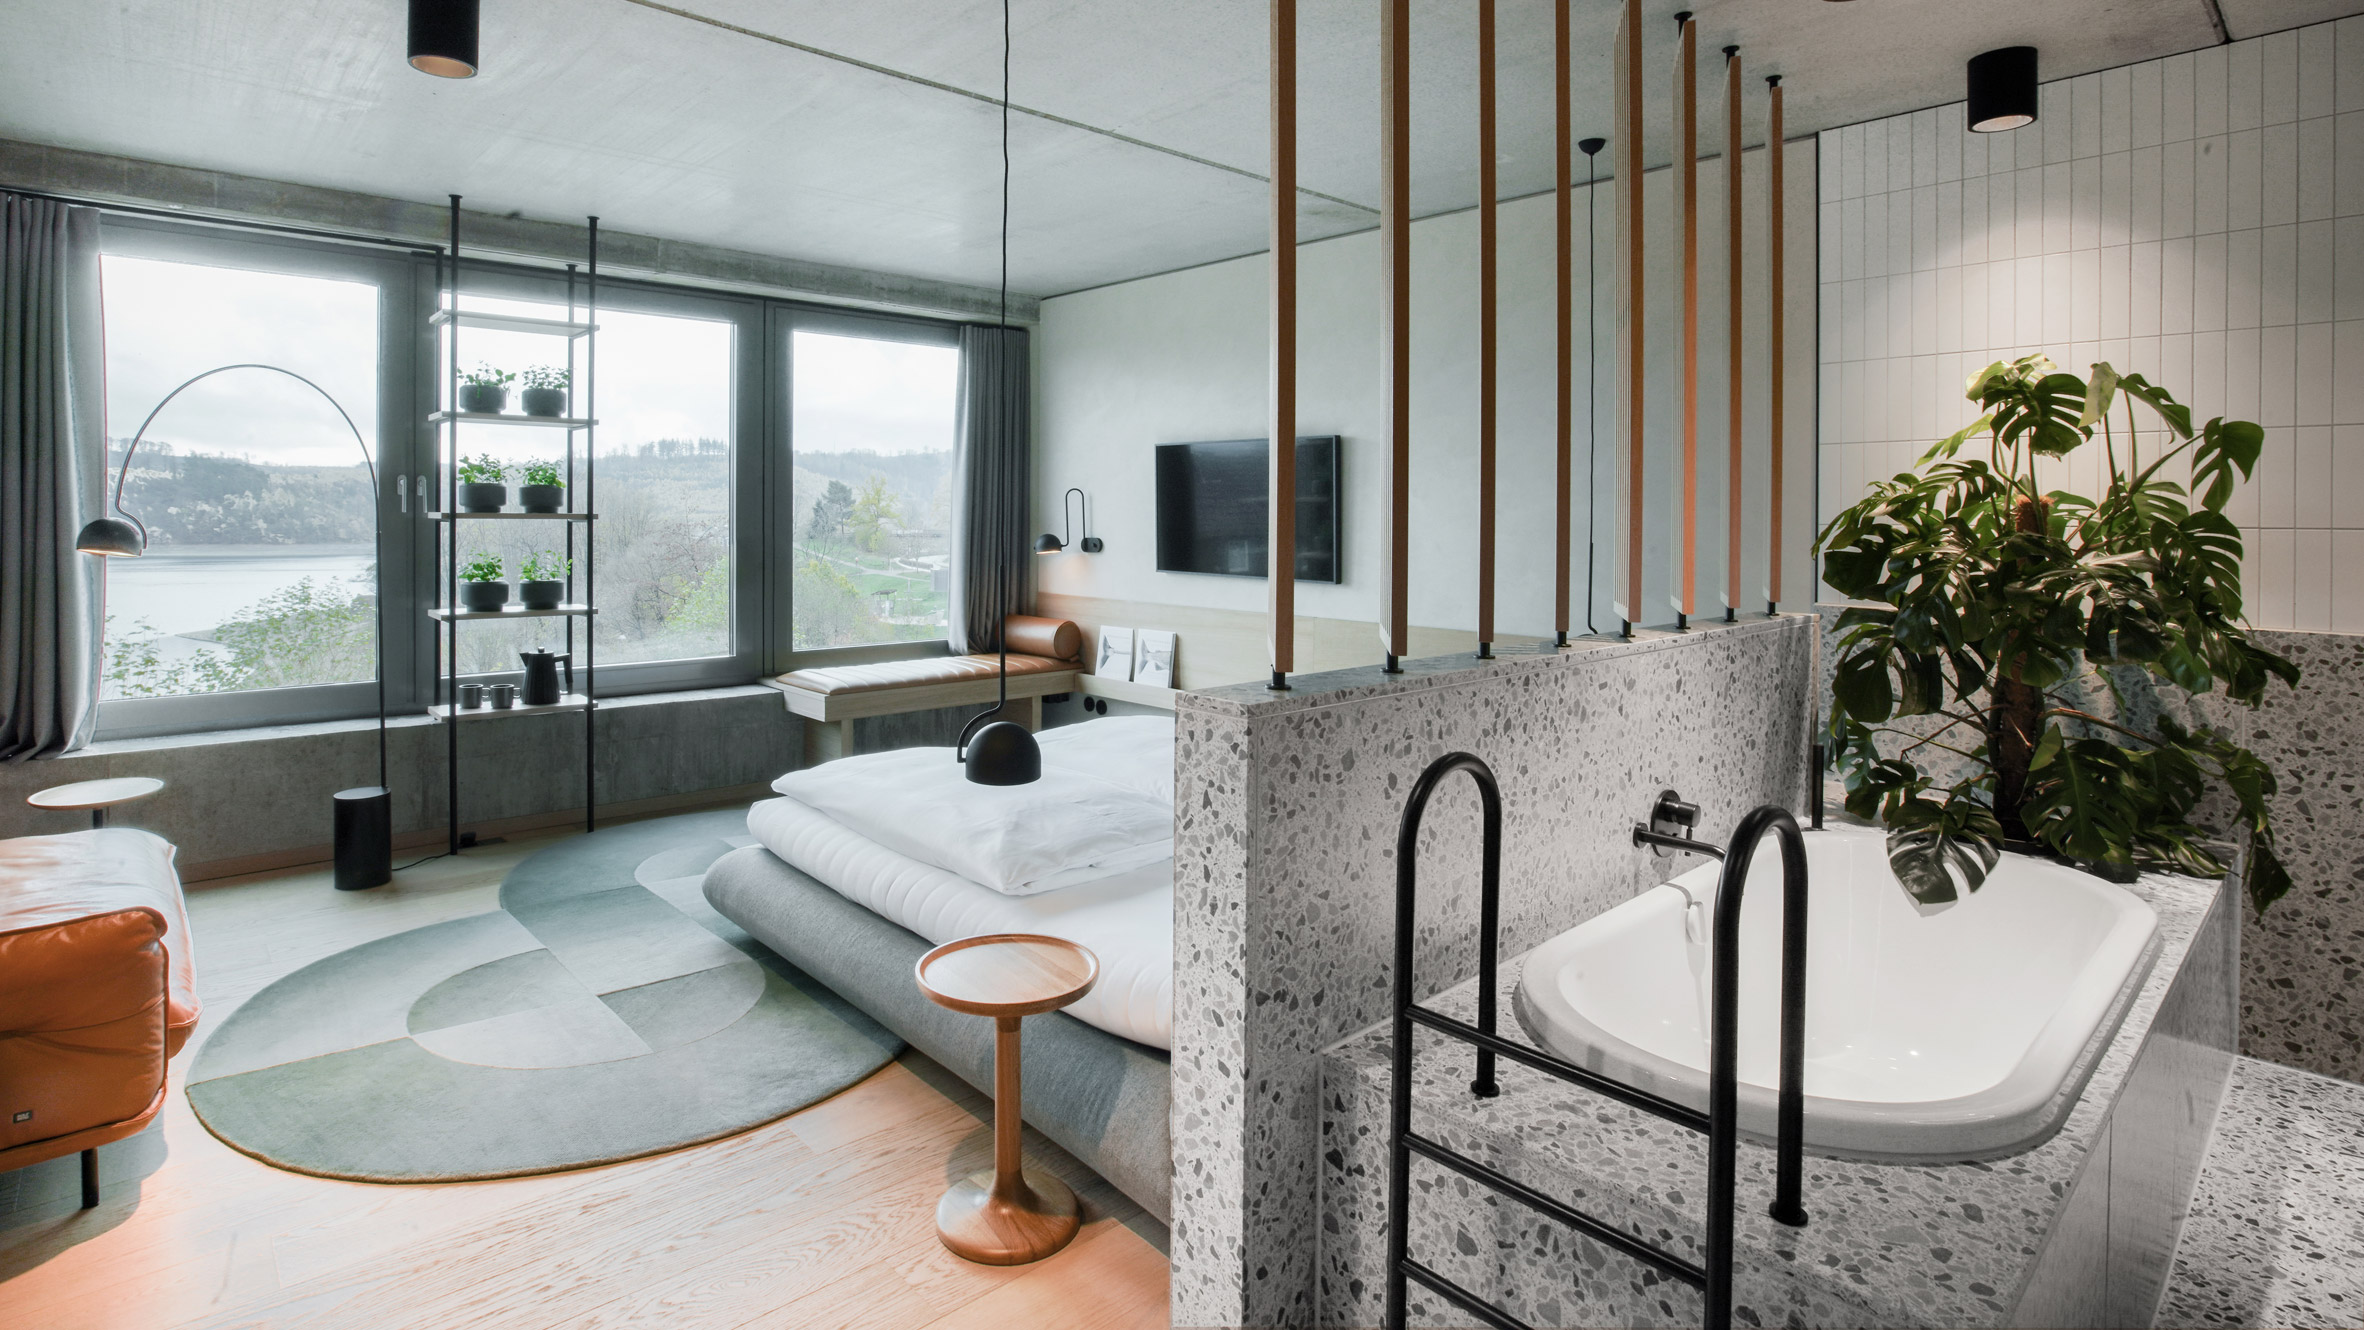 Renovated bedroom interior in hotel by Studio Aisslinger 